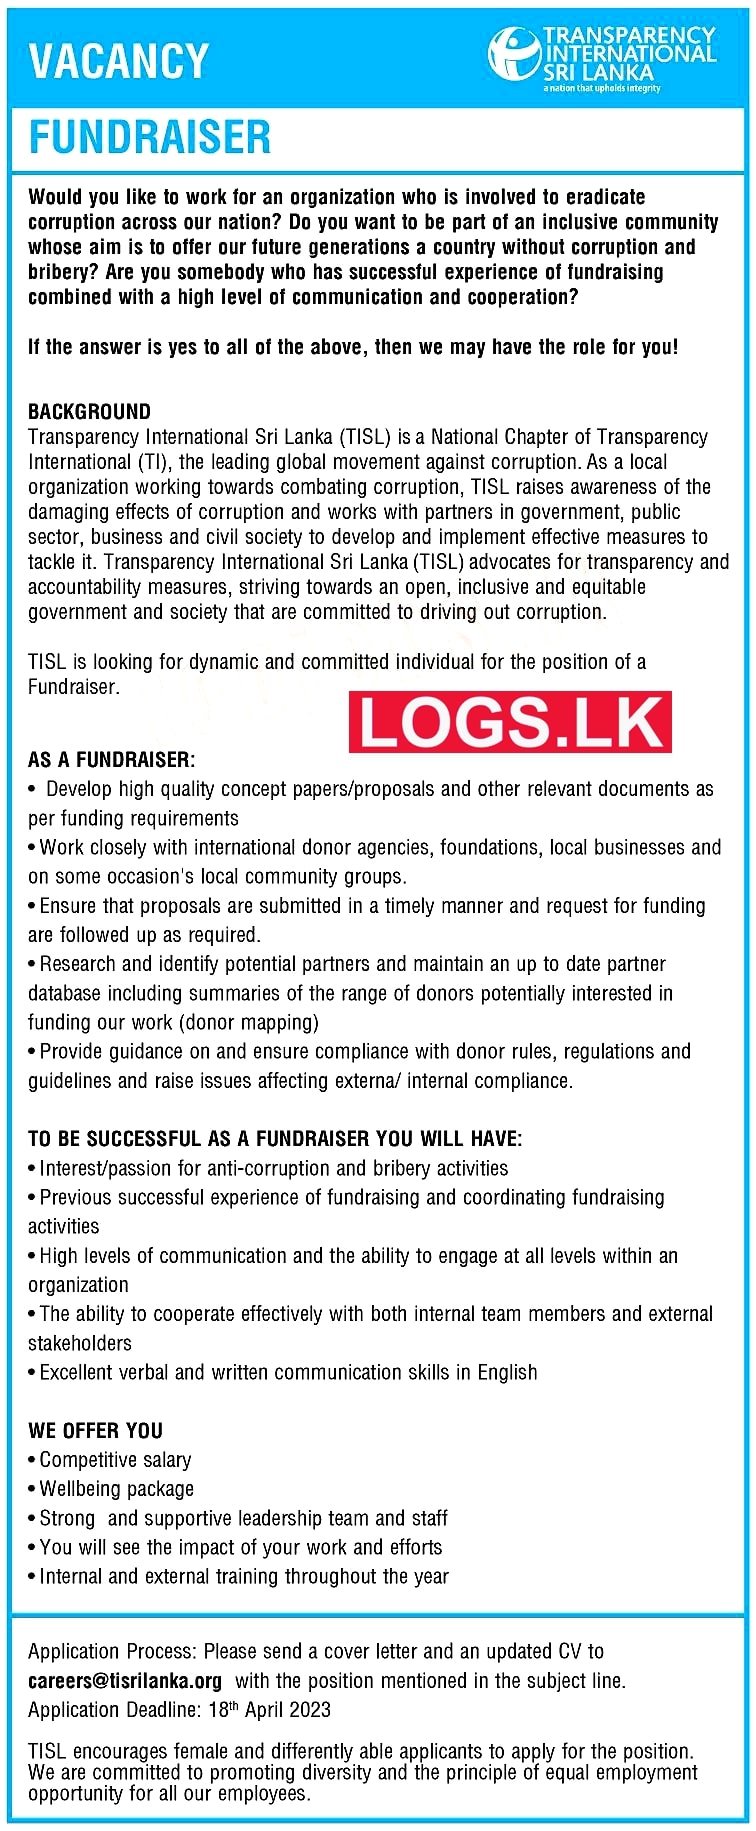 Fundraiser Job Vacancy at Transparency International Sri Lanka Application, Details Download